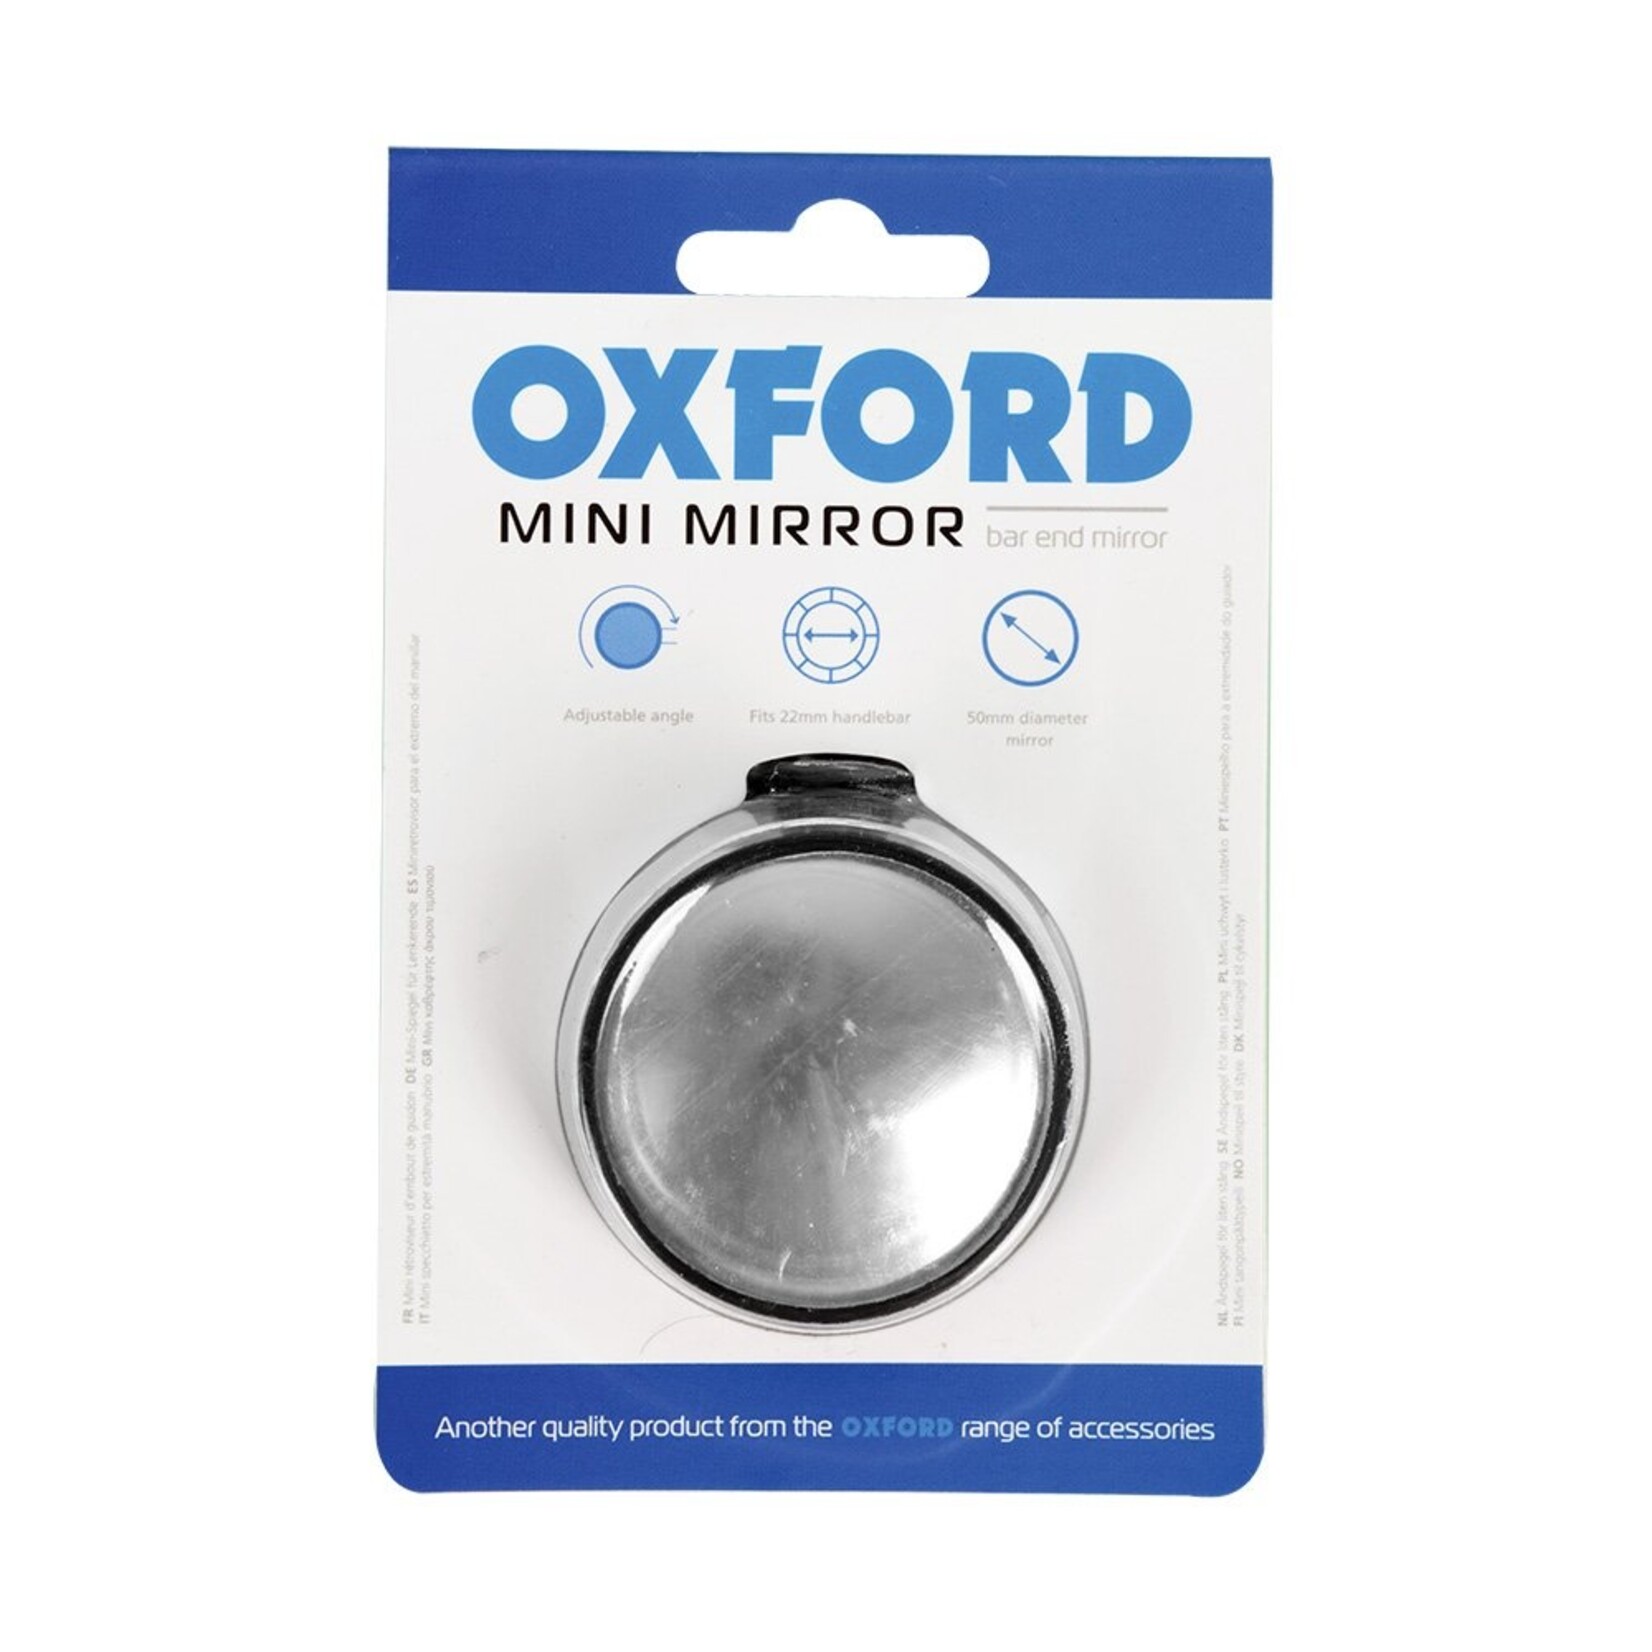 Oxford Oxford Mini Mirror Bar End Mirror